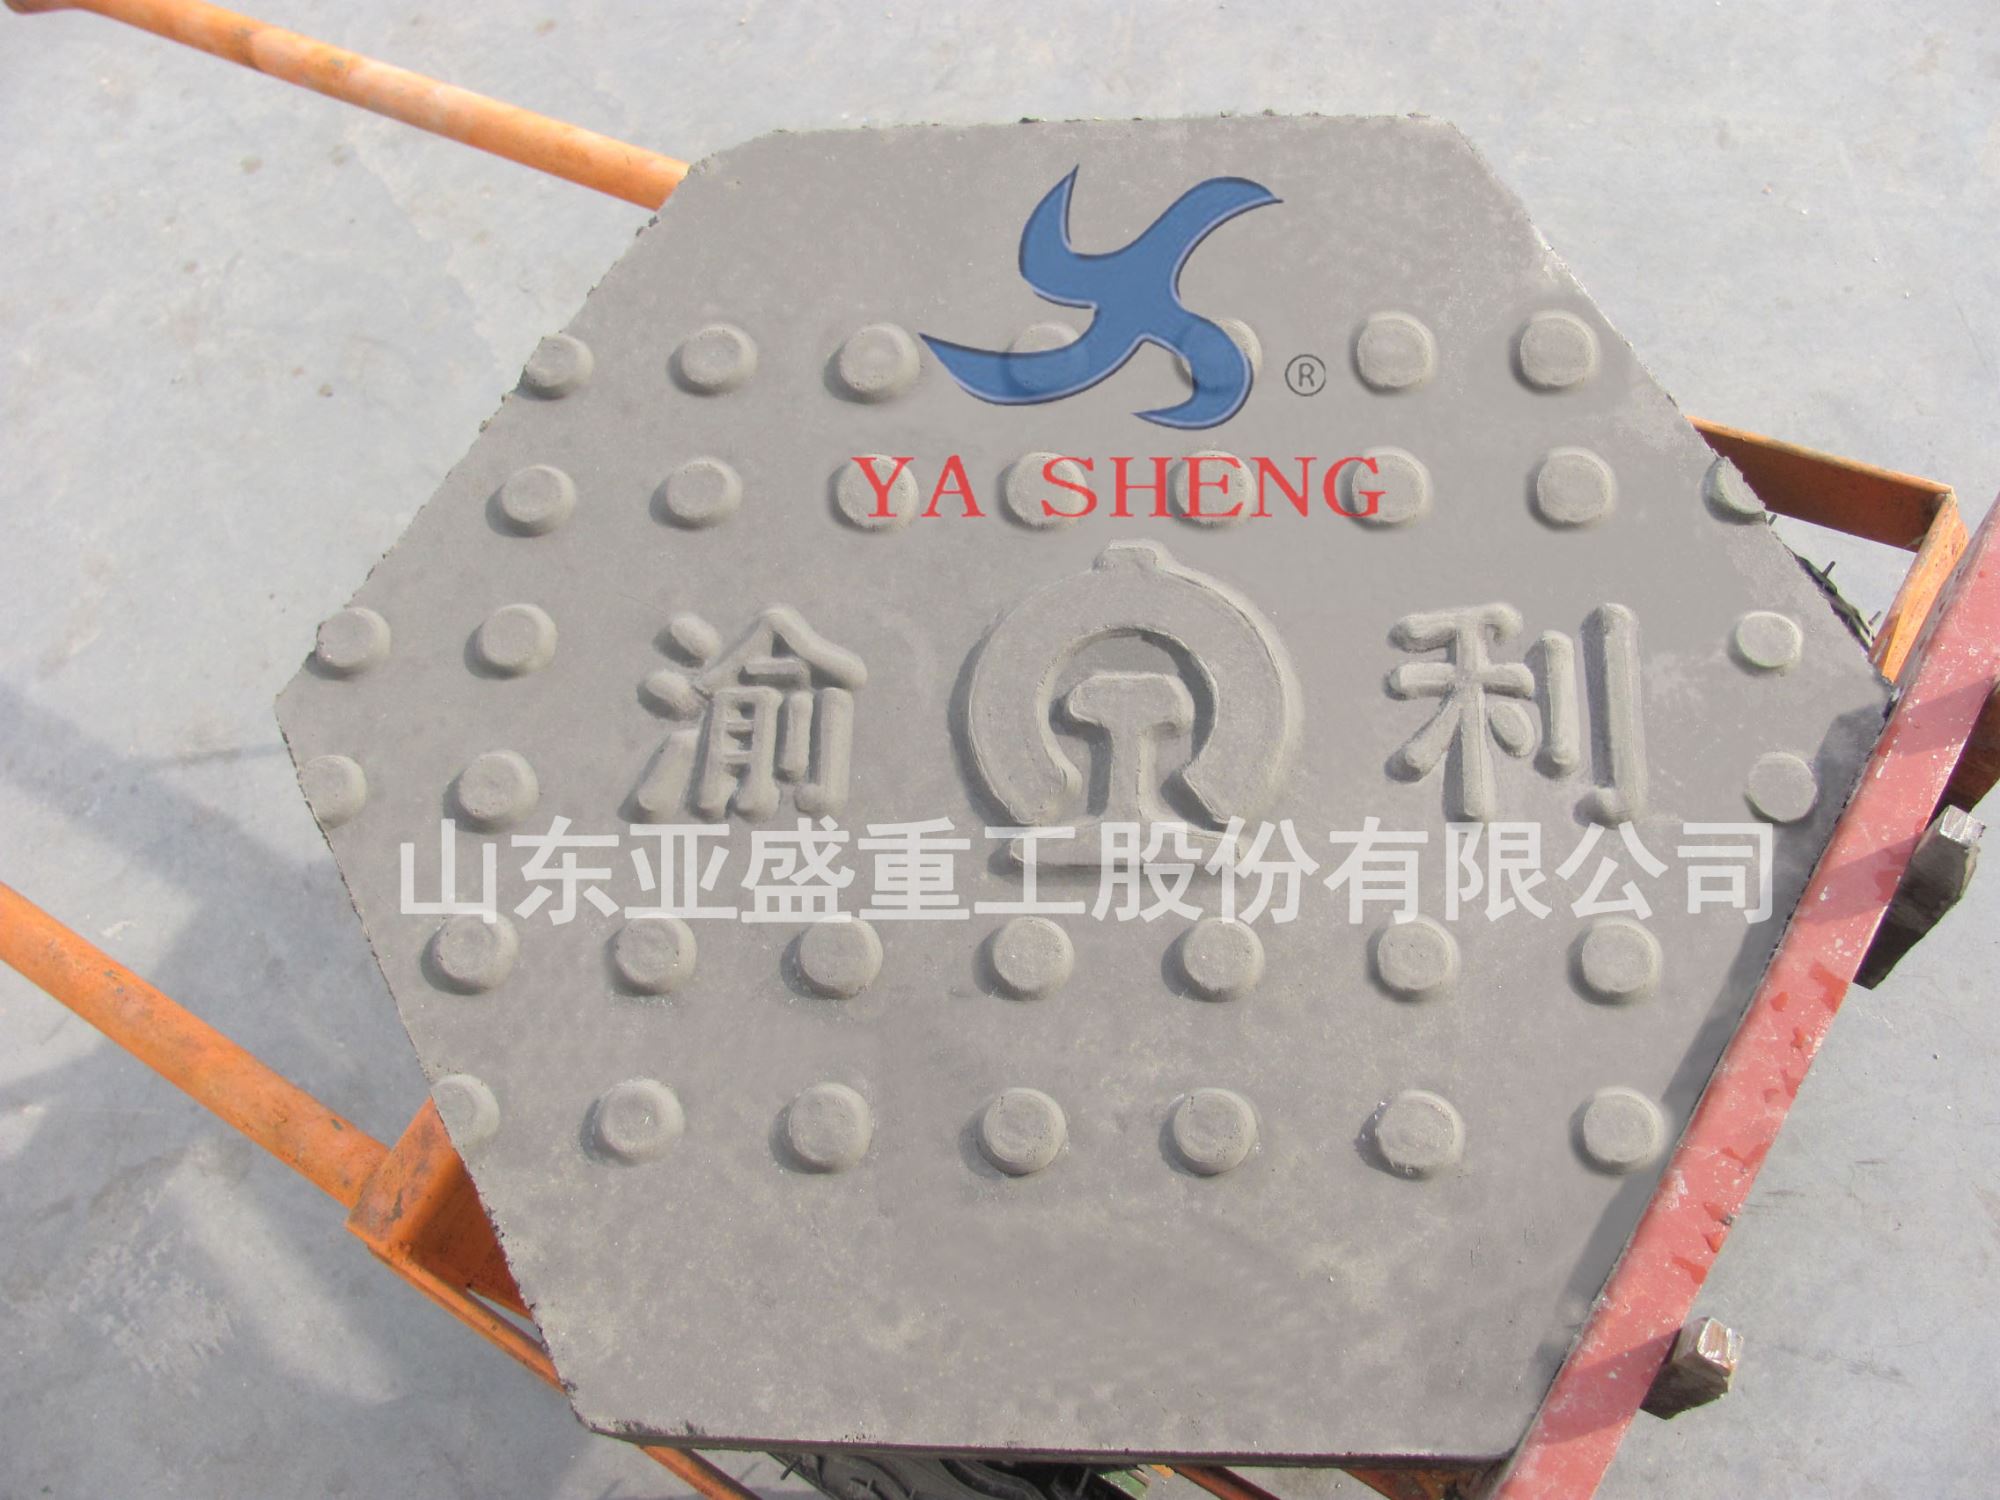 Chongqing Dazu use LZYB-2 molding machine to produce hexagonal blocks